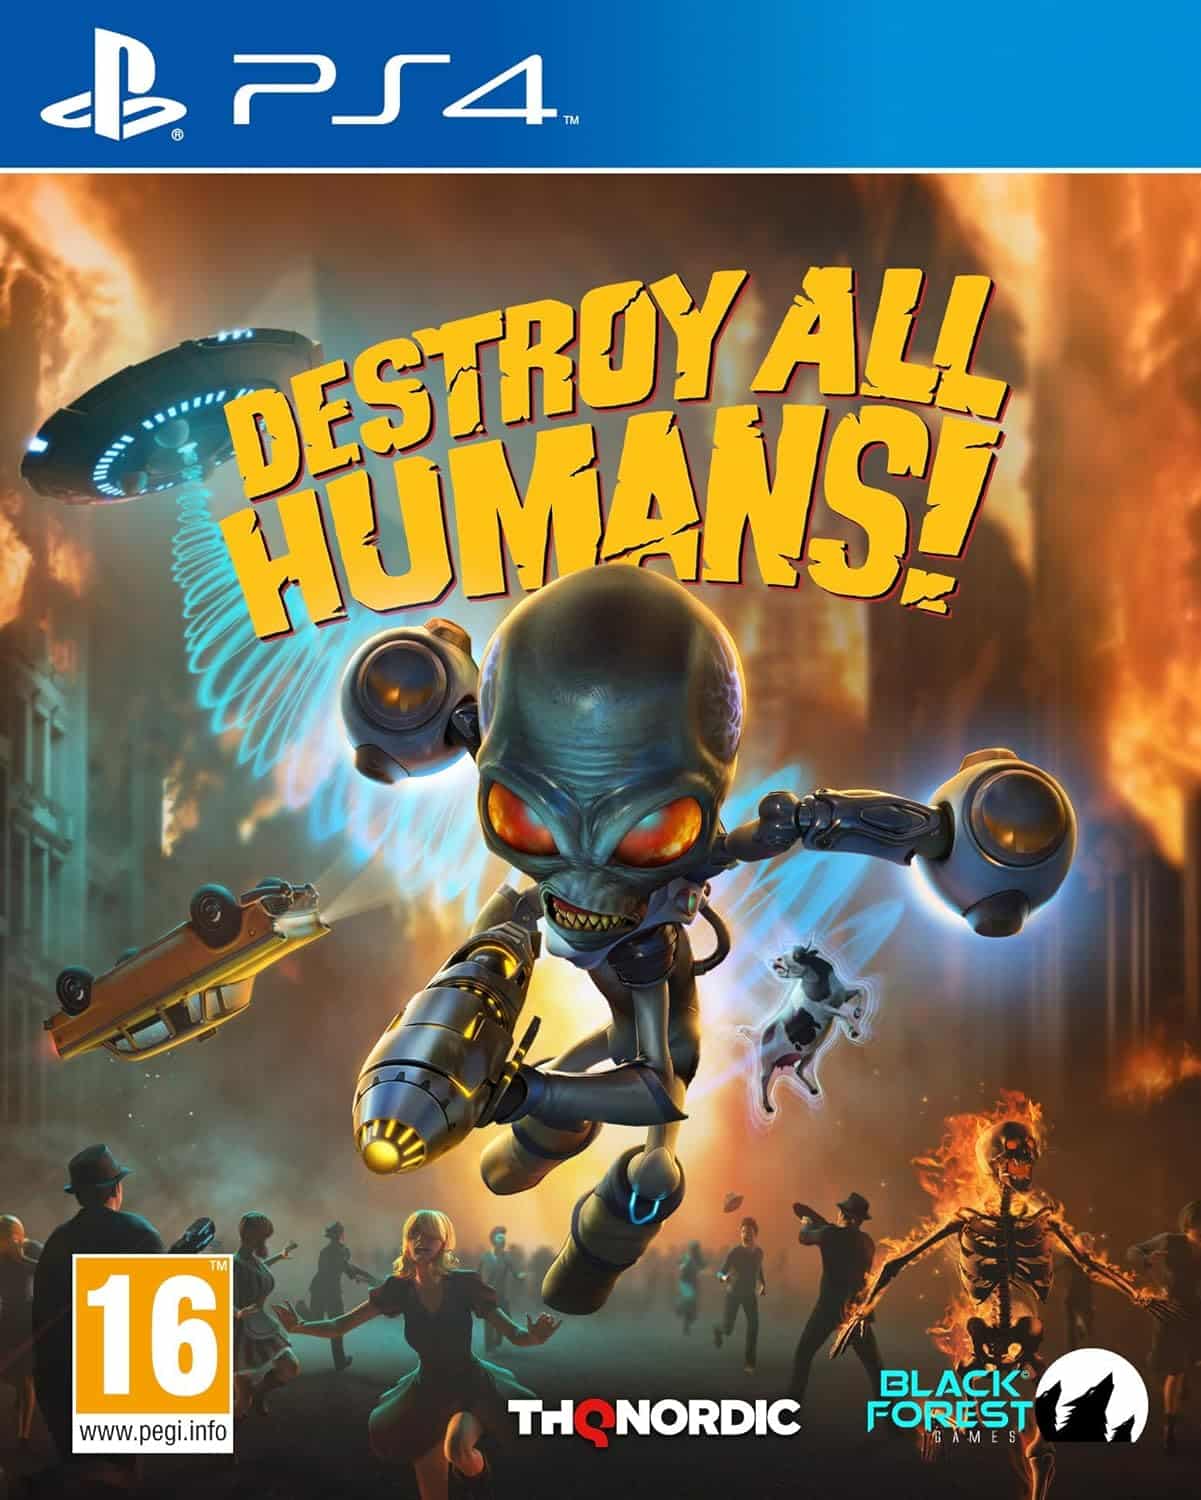 Destroy all Humans! Playstation 4